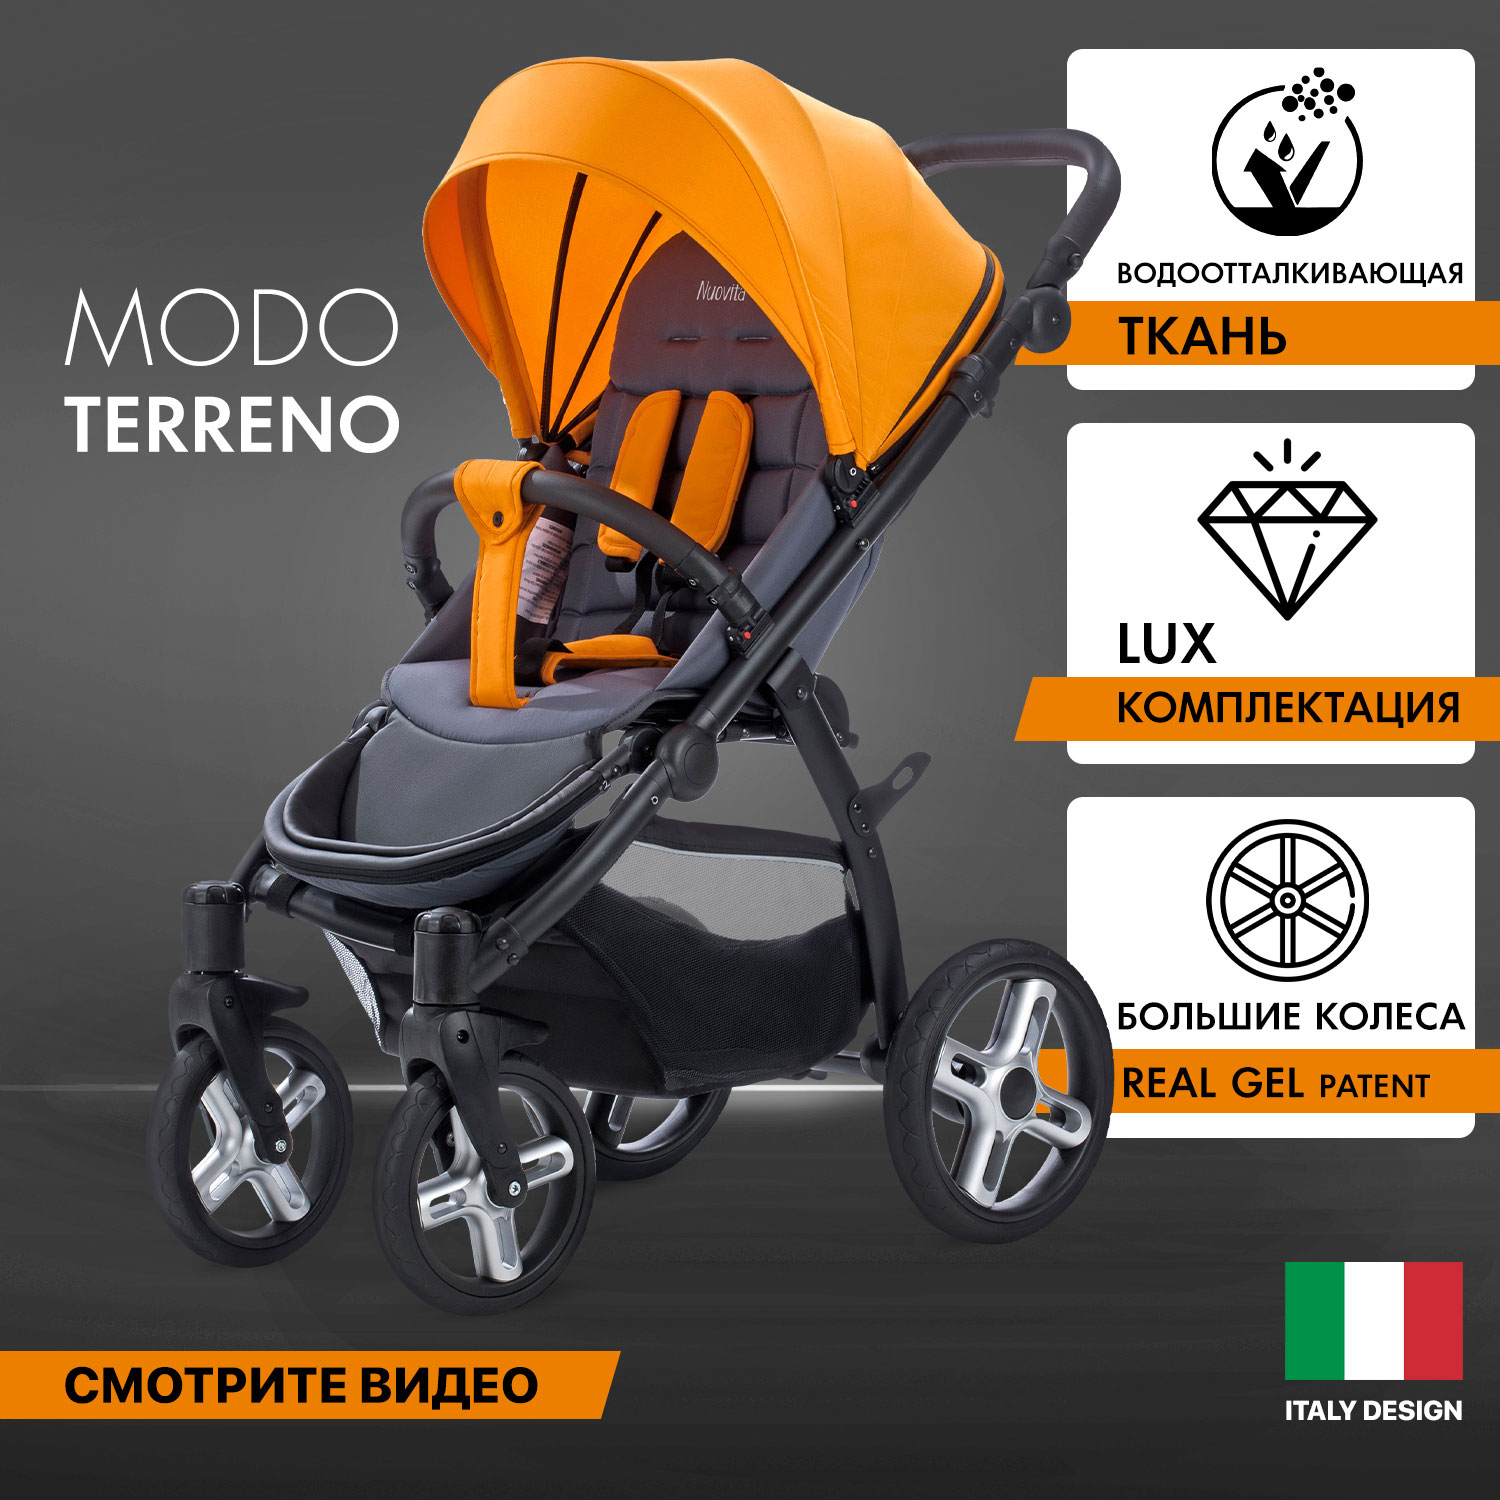 Прогулочная коляска Nuovita Modo Terreno оранжево - серый